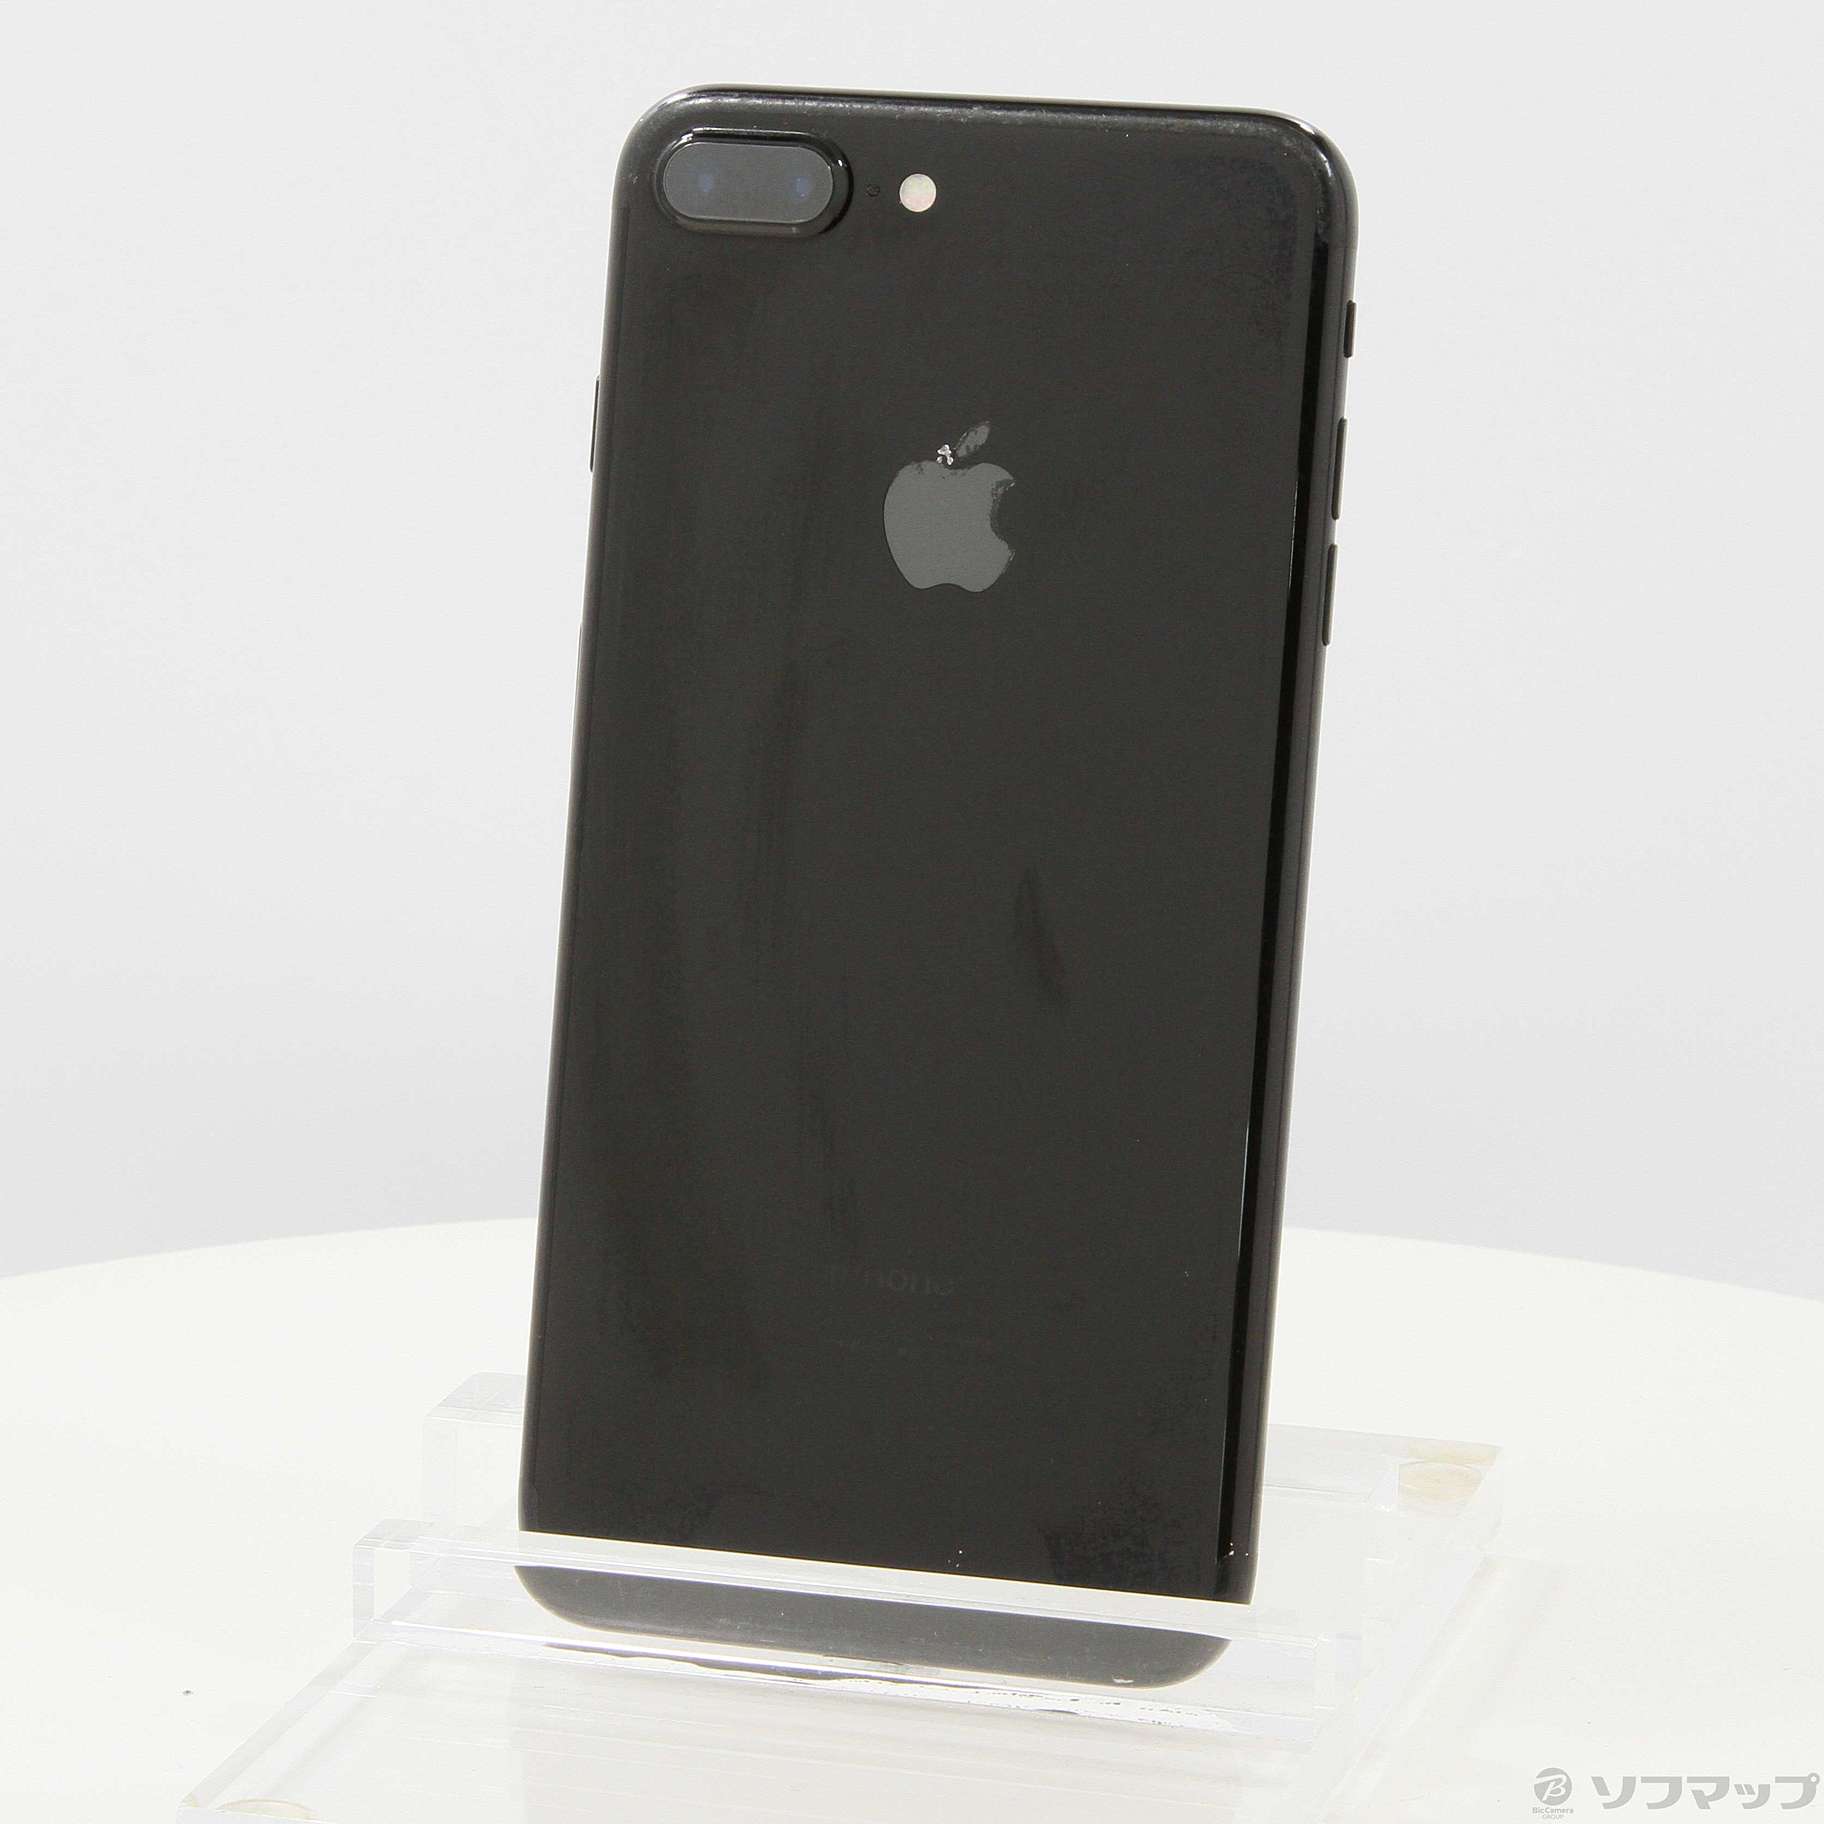 Apple iPhone 7 Plus 256GB ジェットブラック - www.sorbillomenu.com